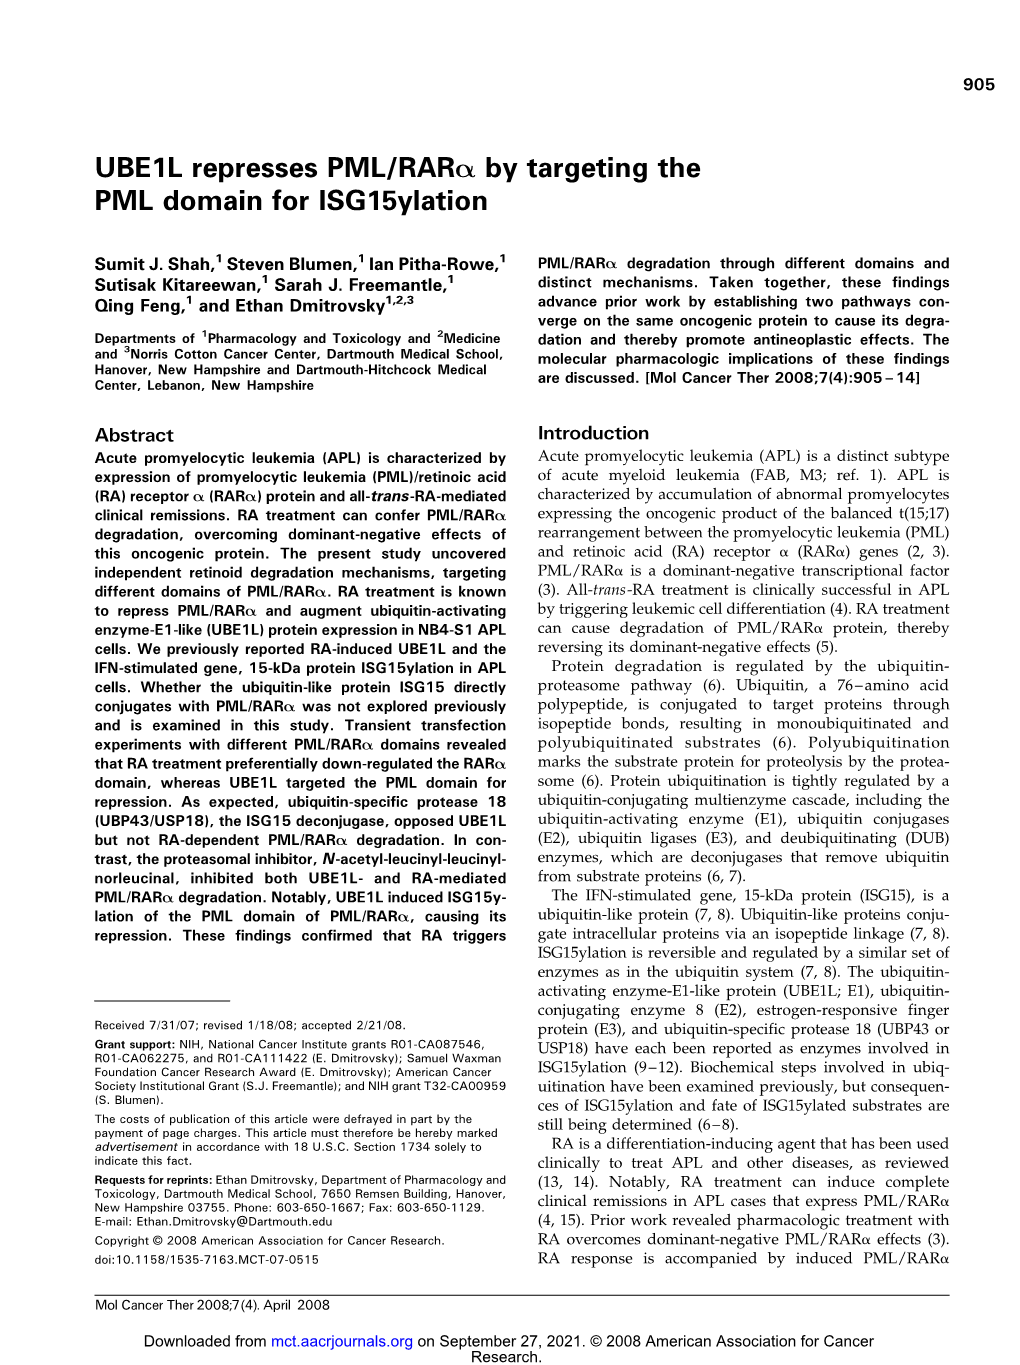 UBE1L Represses PML/RARA by Targeting the PML Domain for Isg15ylation